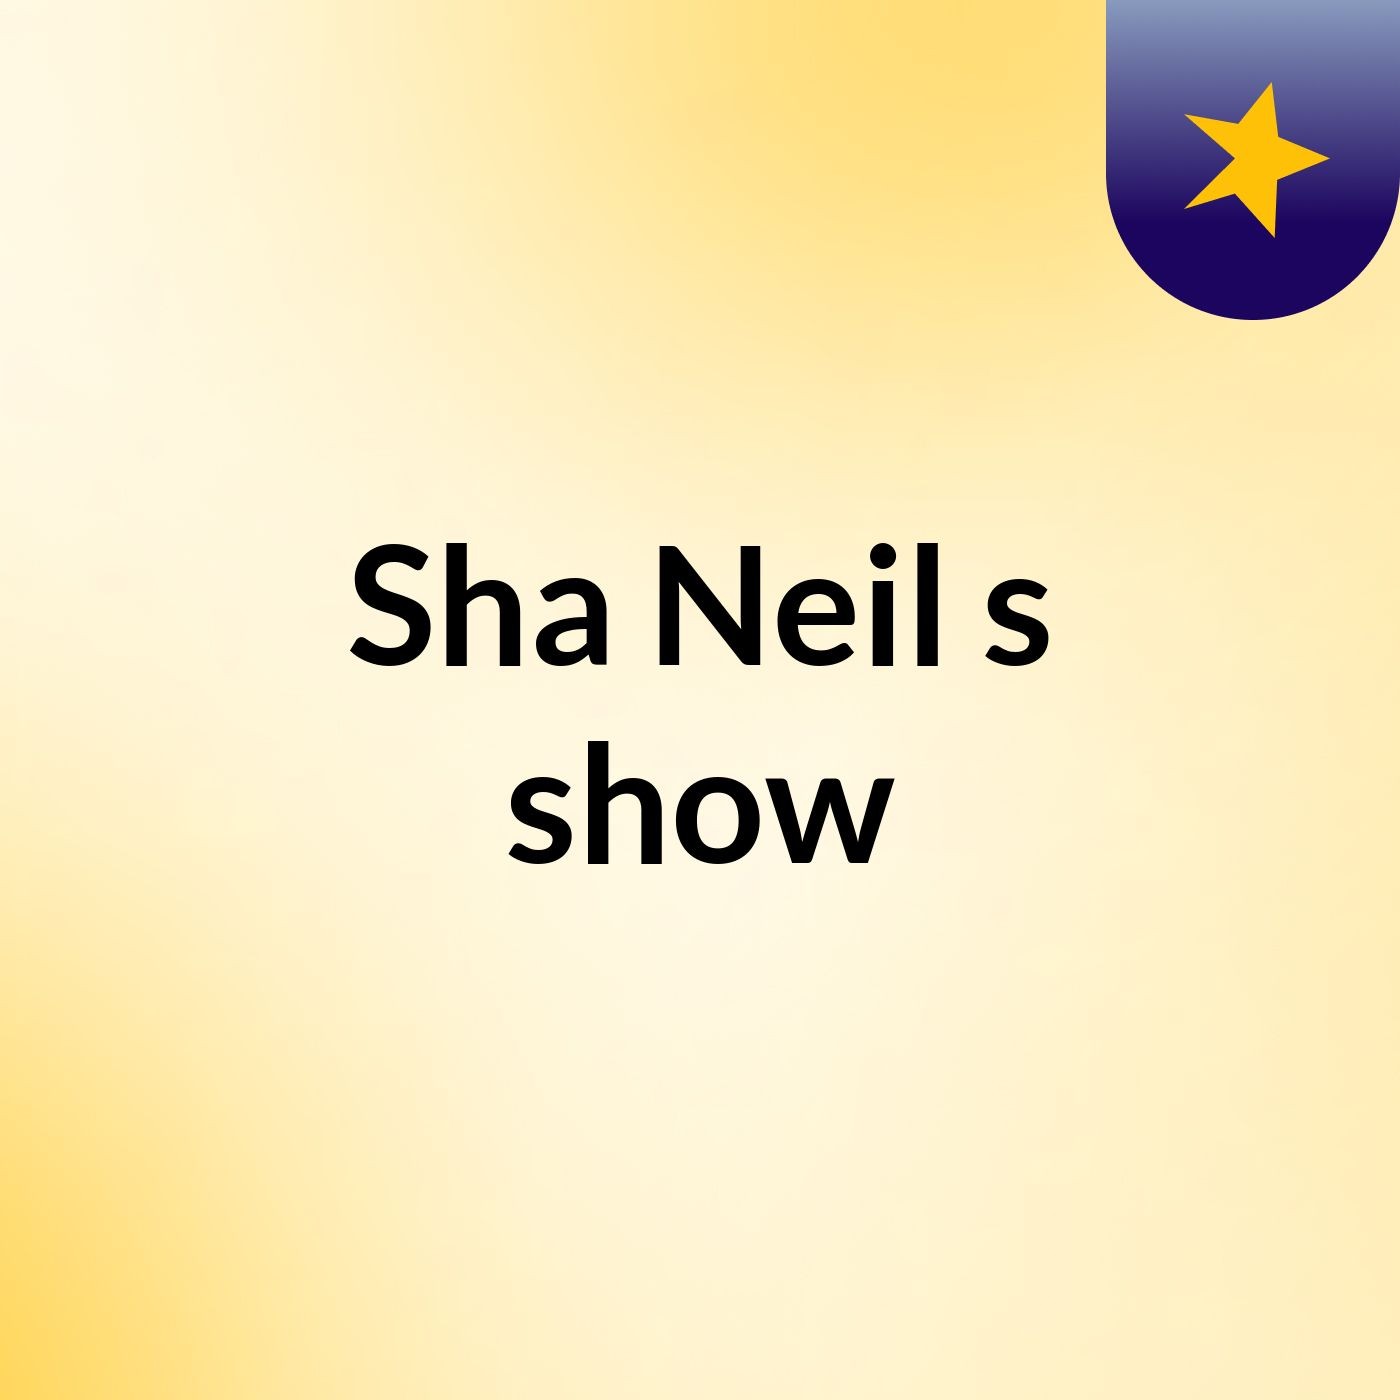 Sha Neil's show